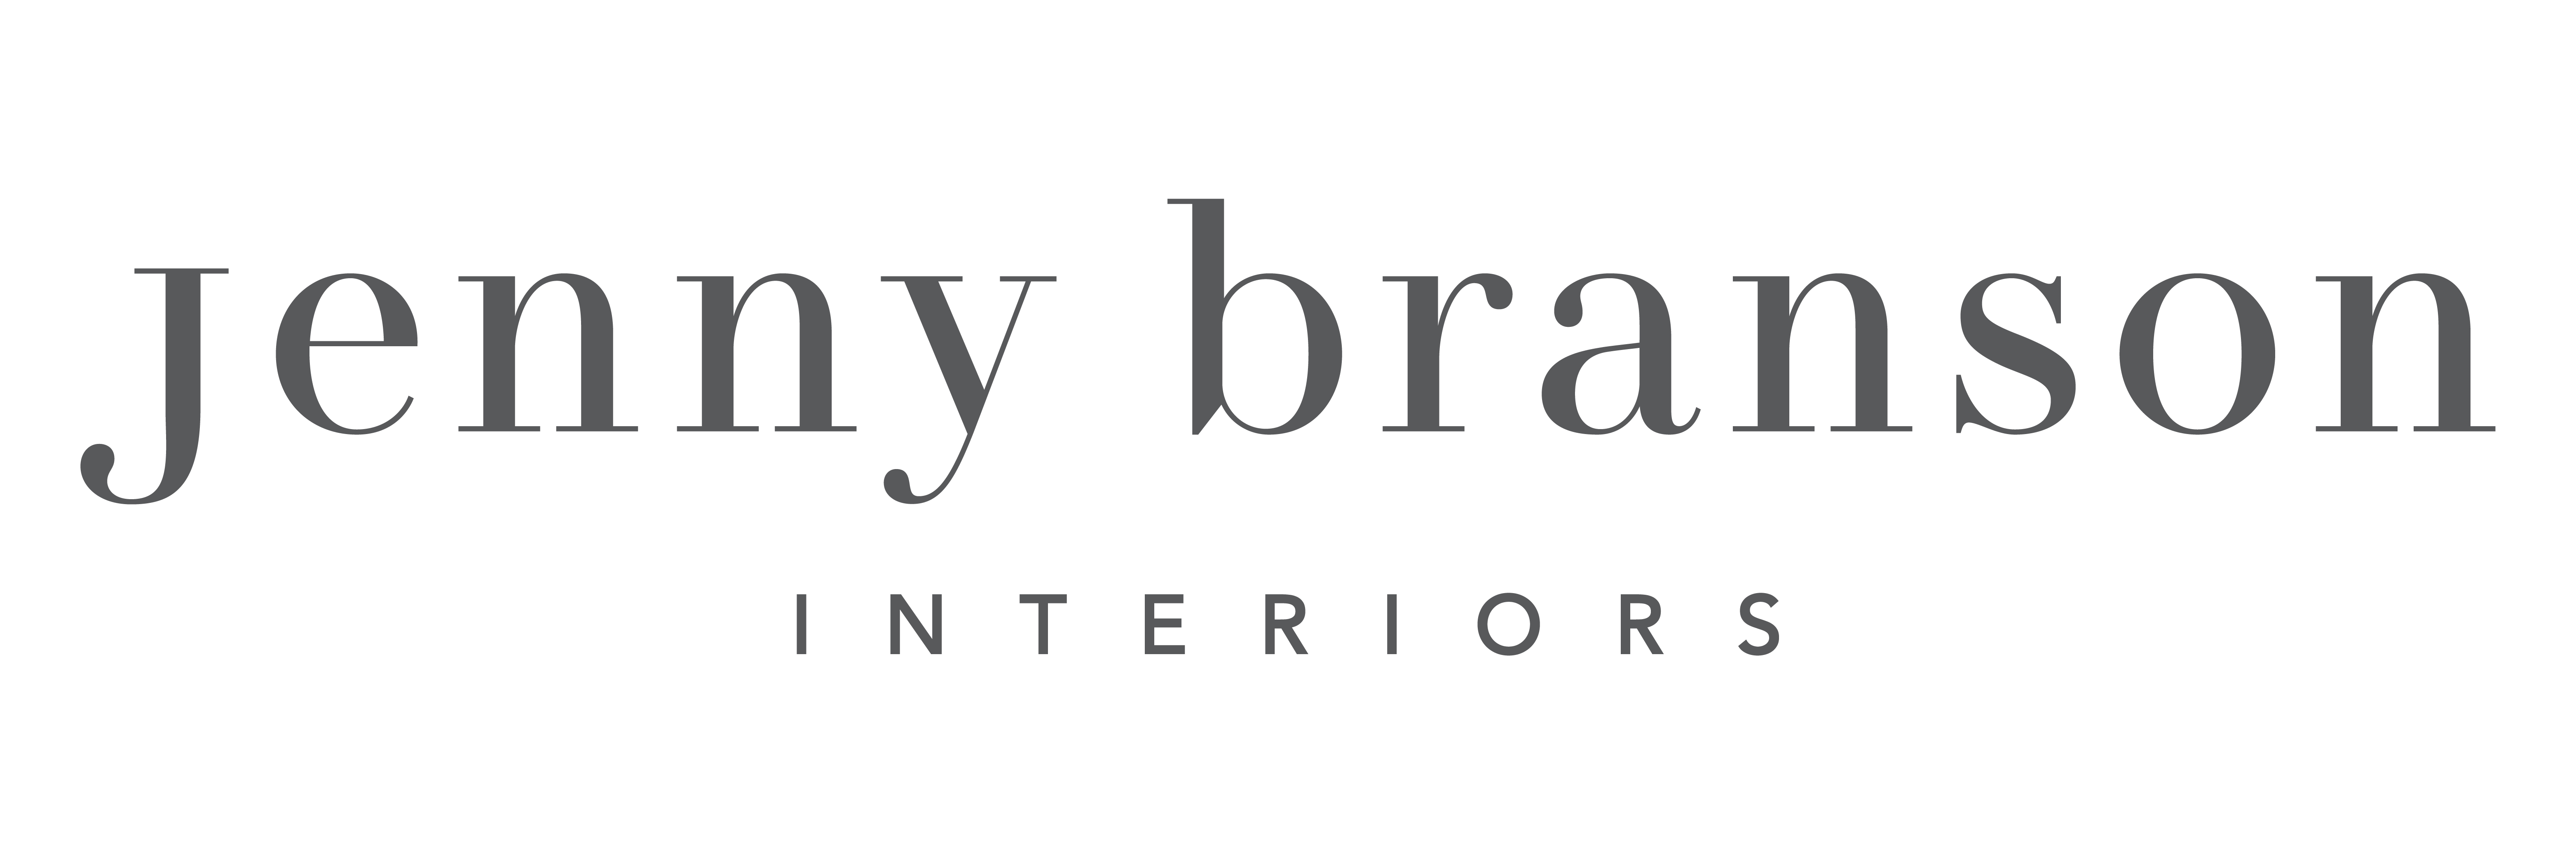 jenny branson logo